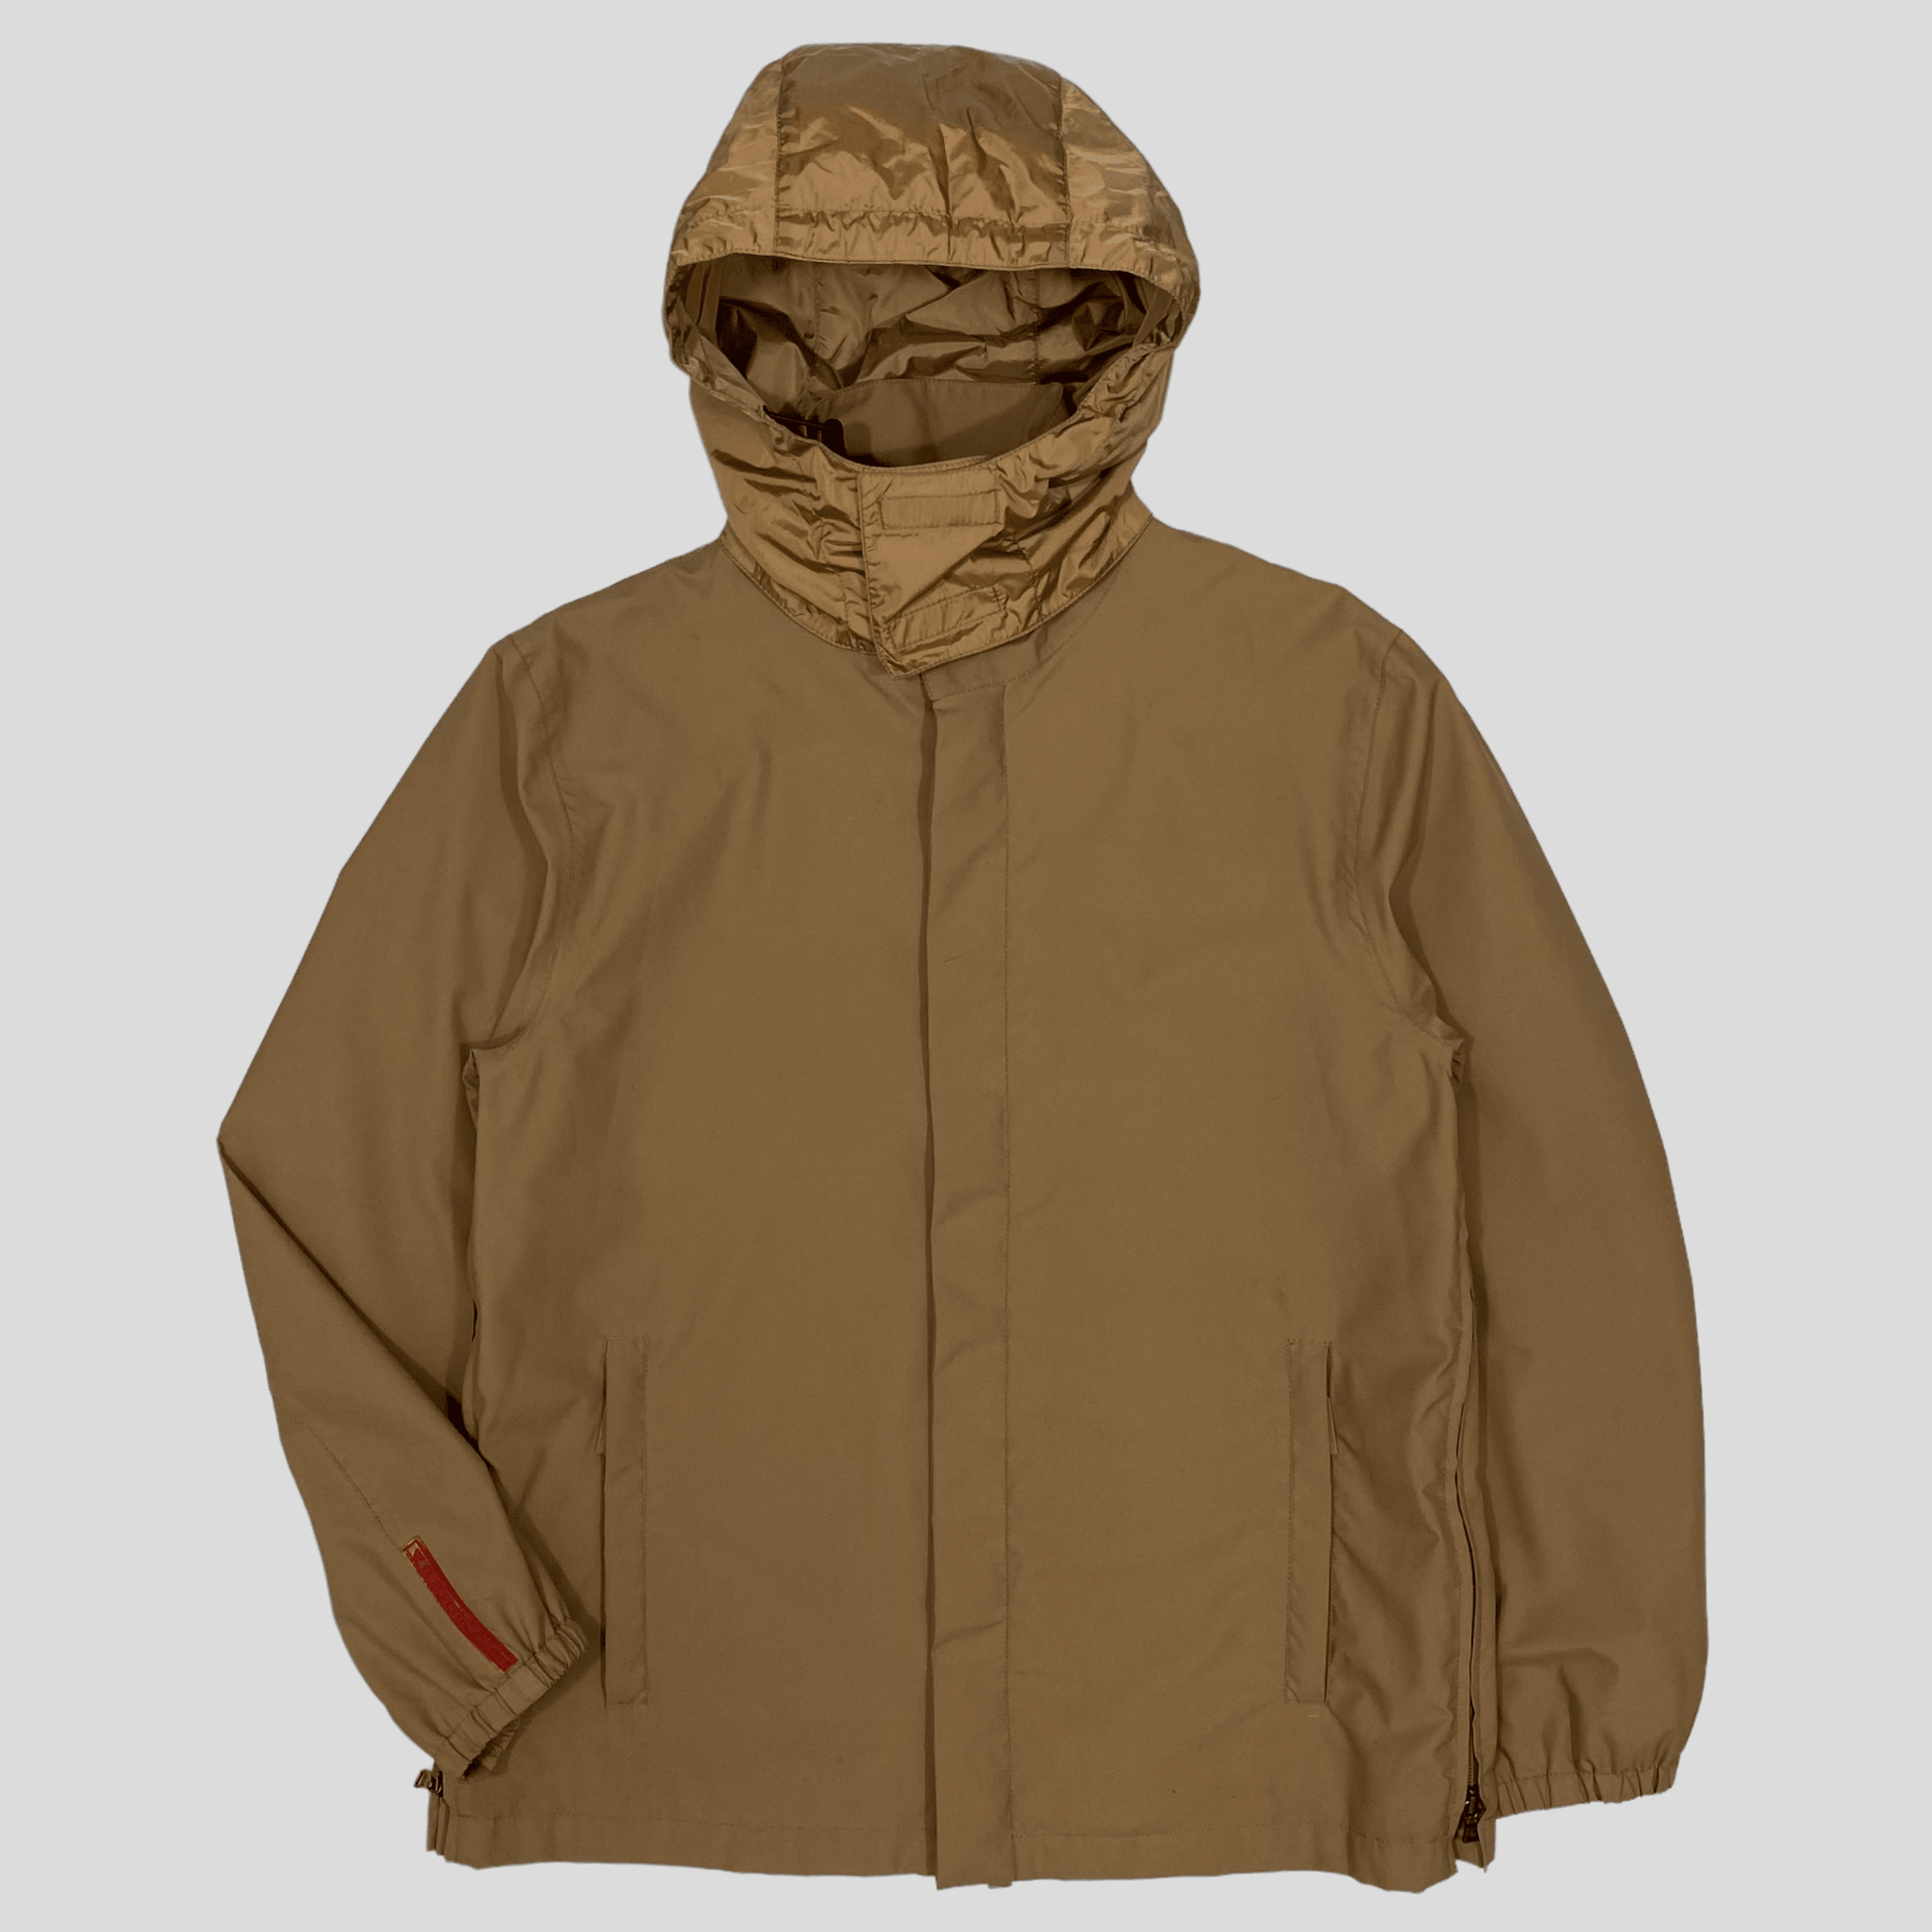 Prada Sport SS01 Goretex Jacket with Nylon Pocket Hood - L - Known Source